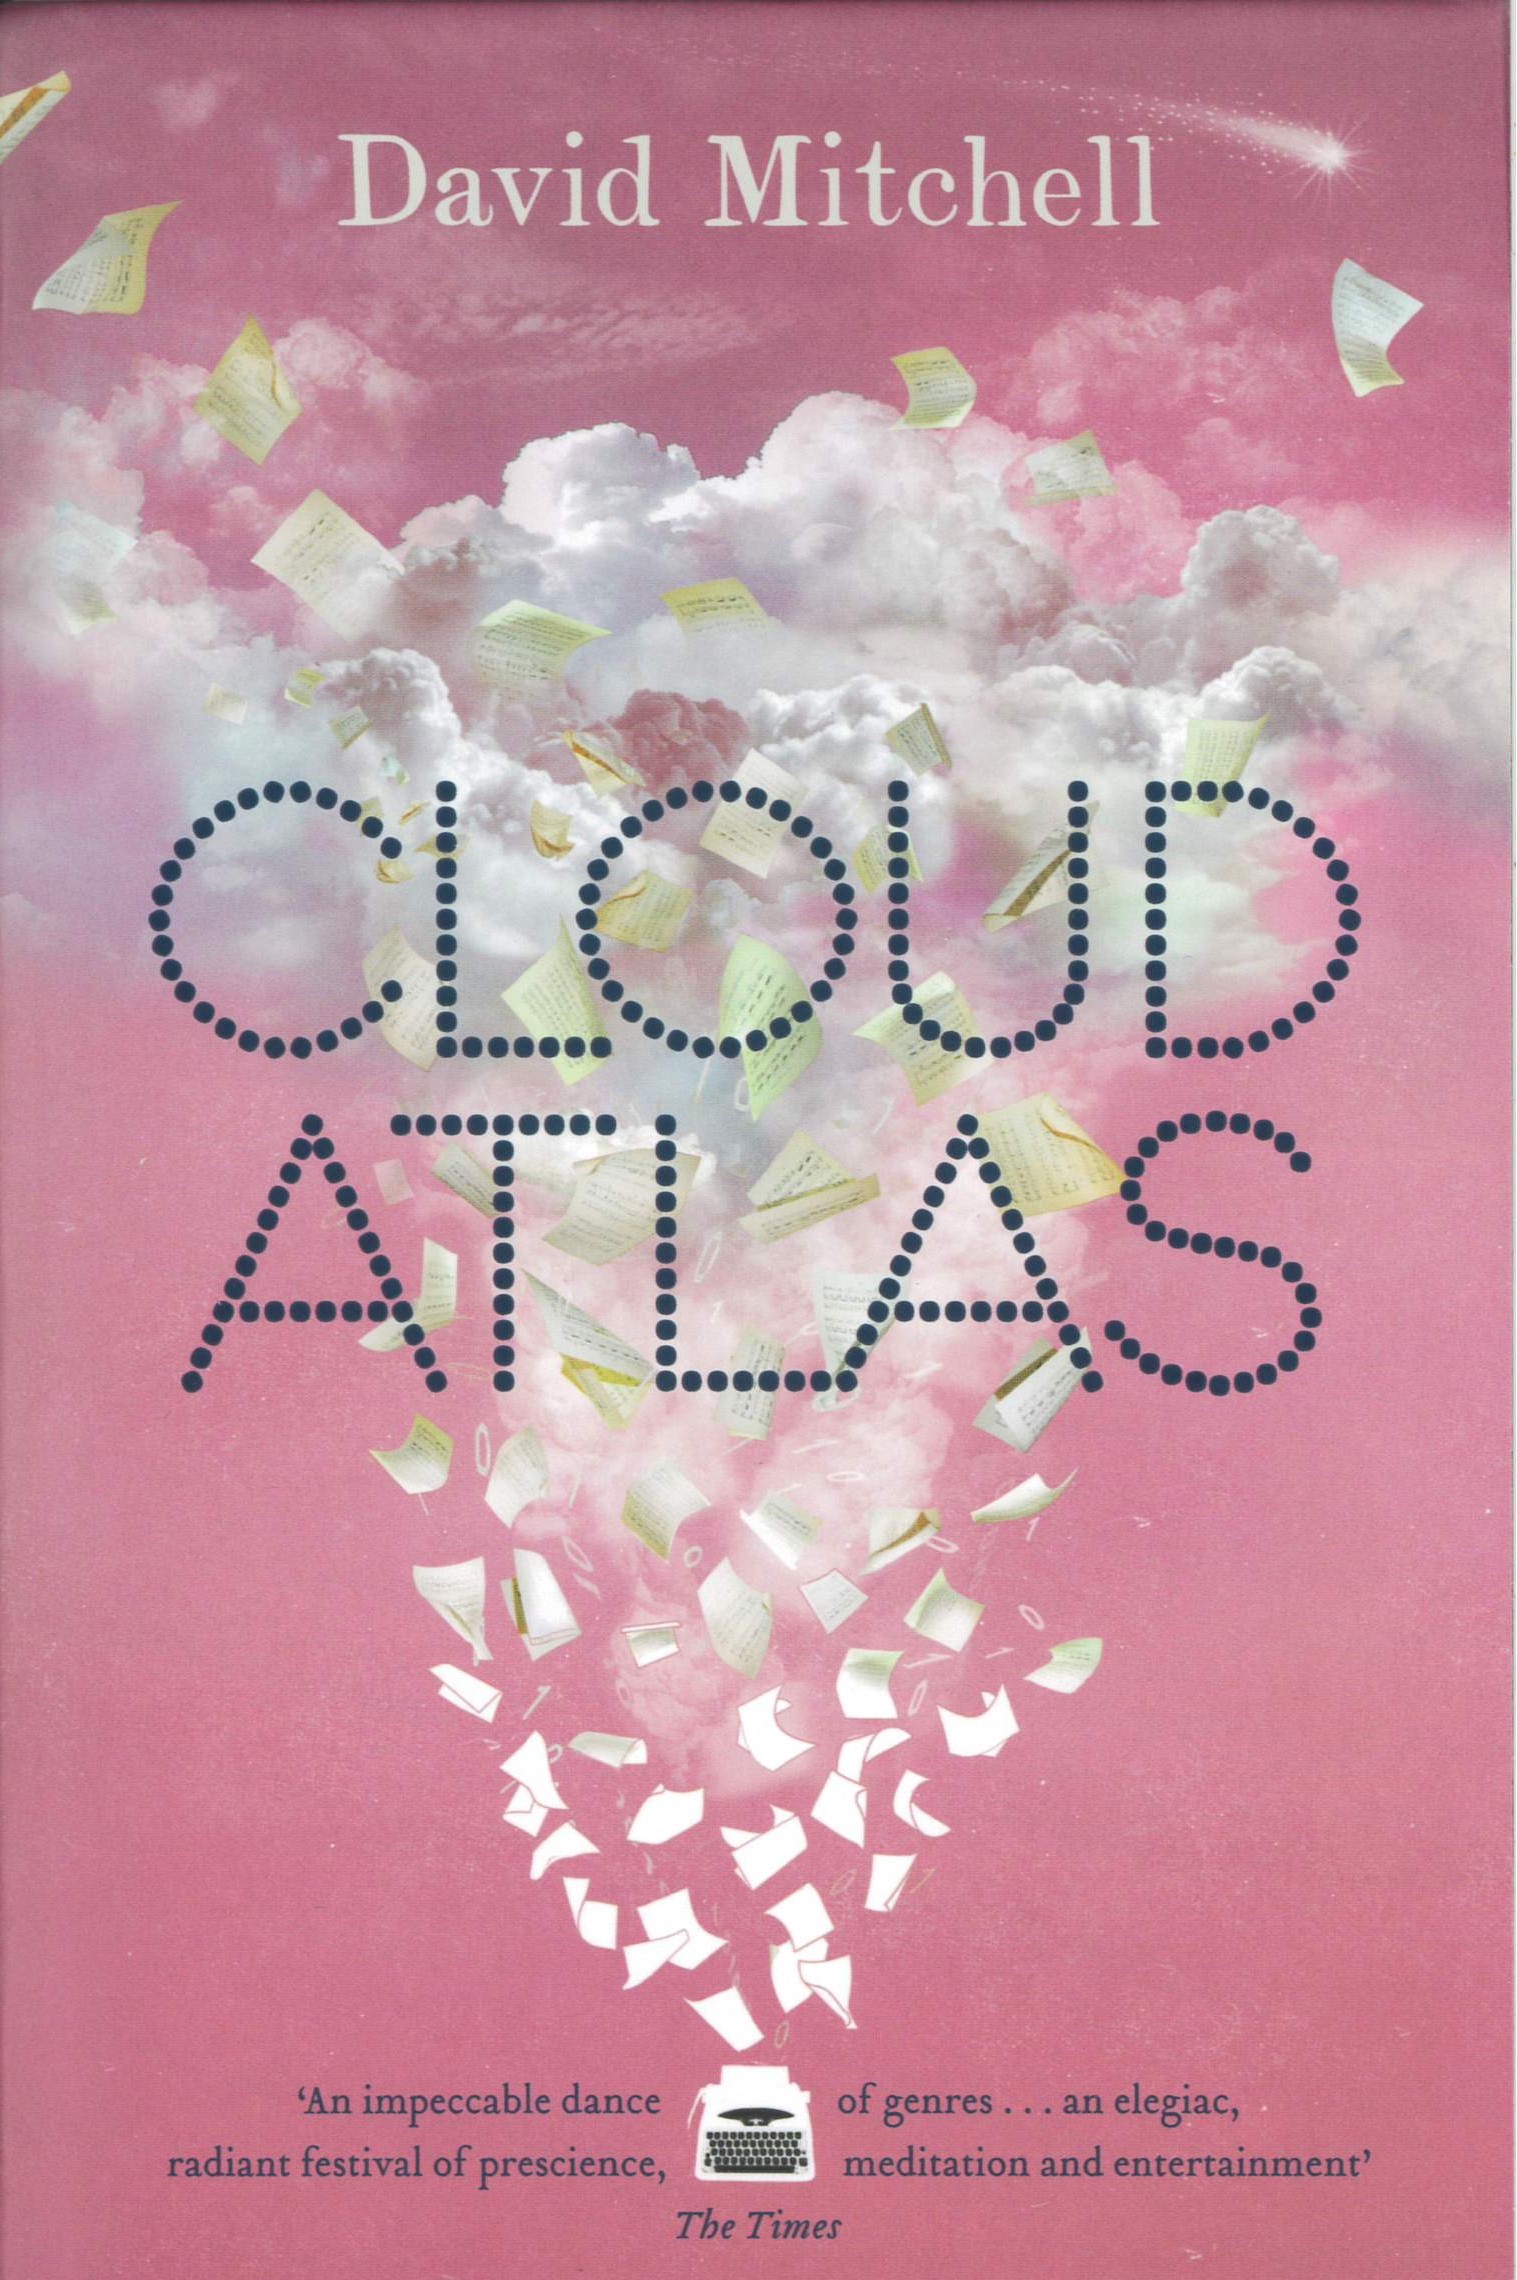 Cloud atlas /